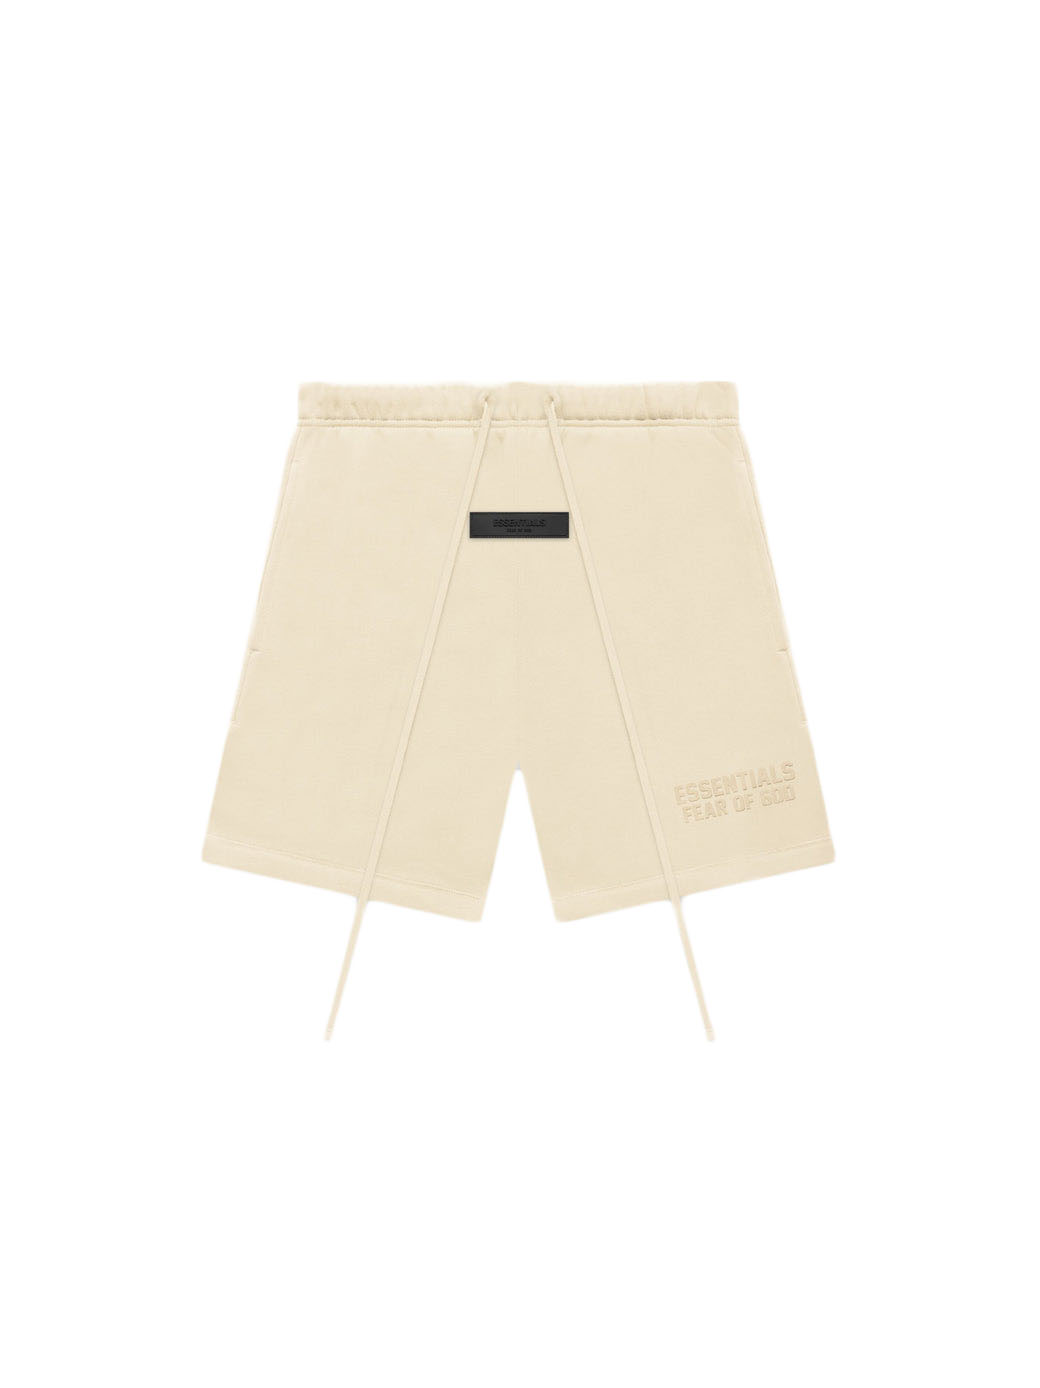 Buy Essentials Shorts Streetwear - StockX